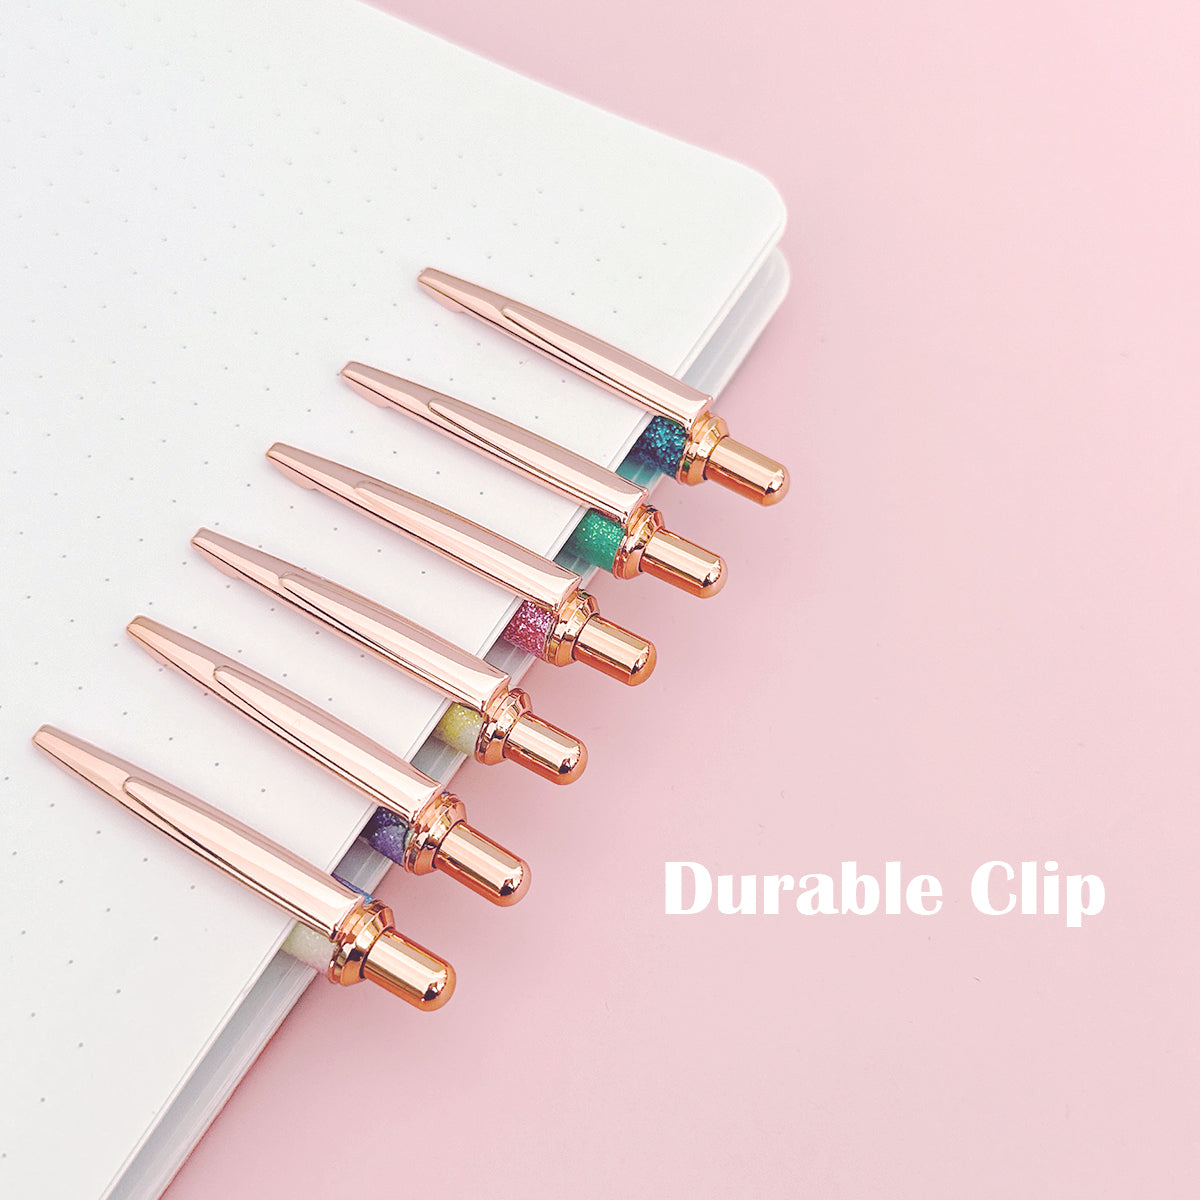 Wrapables Glitter Ballpoint Pens for Women, 1.0mm Medium Point Retractable Metal Pens (Set of 6)